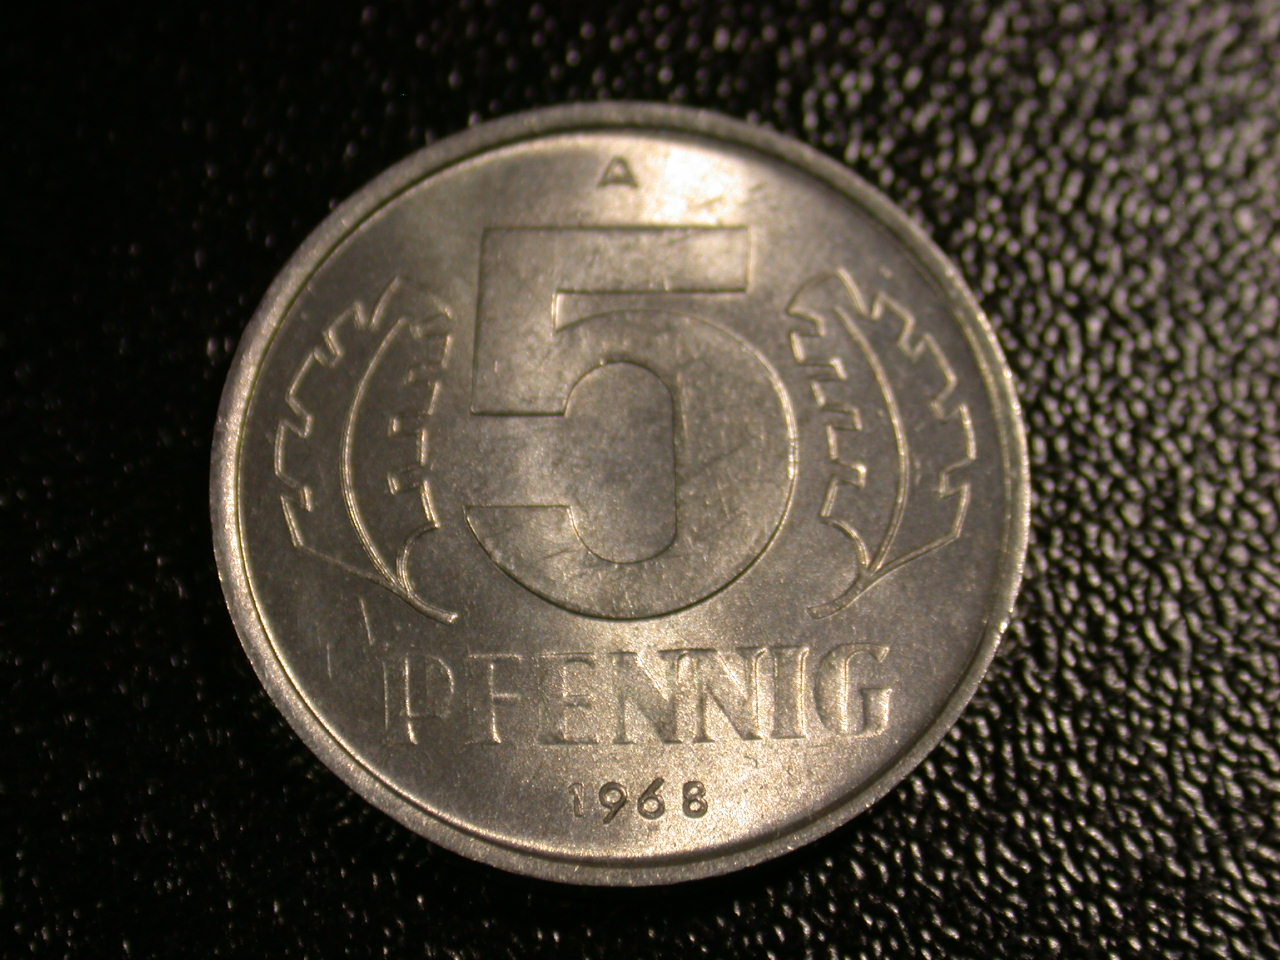  12045  DDR   5 Pfennig  1968 in f.st  in matt   